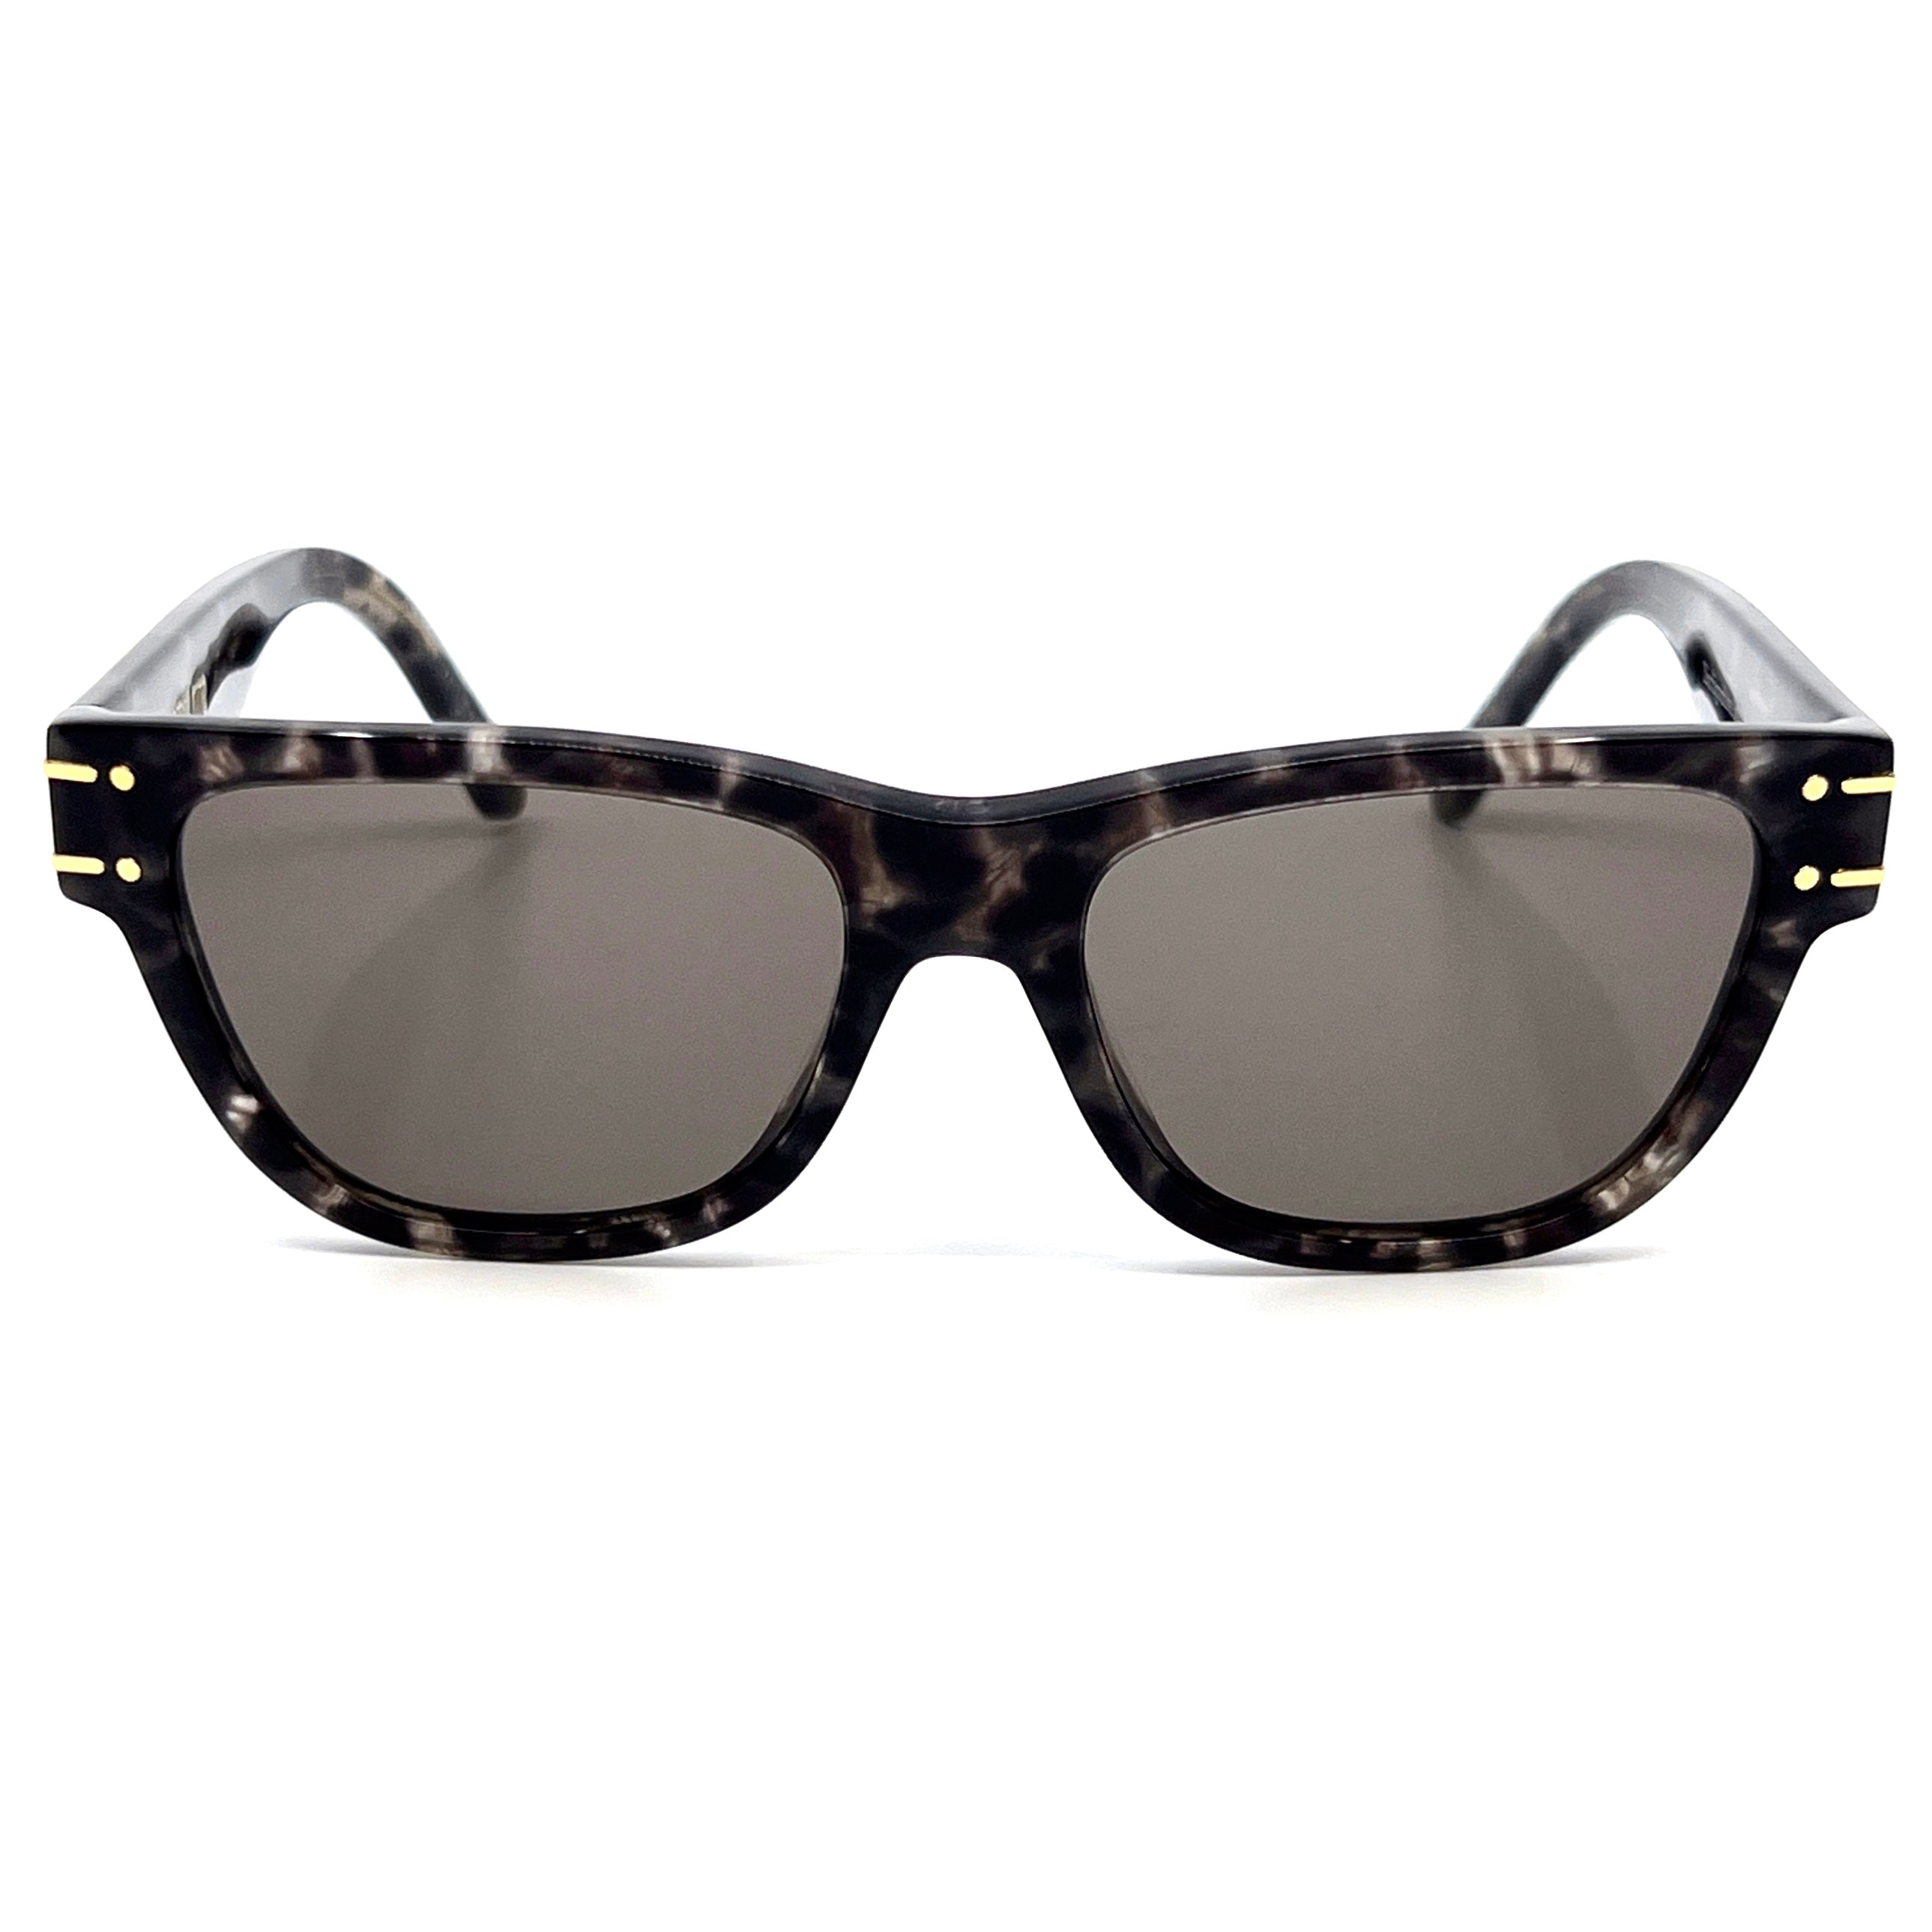 New! Tory Burch Kira Sunglasses TY7180U 1474/73, Authentic in Brown, Women's